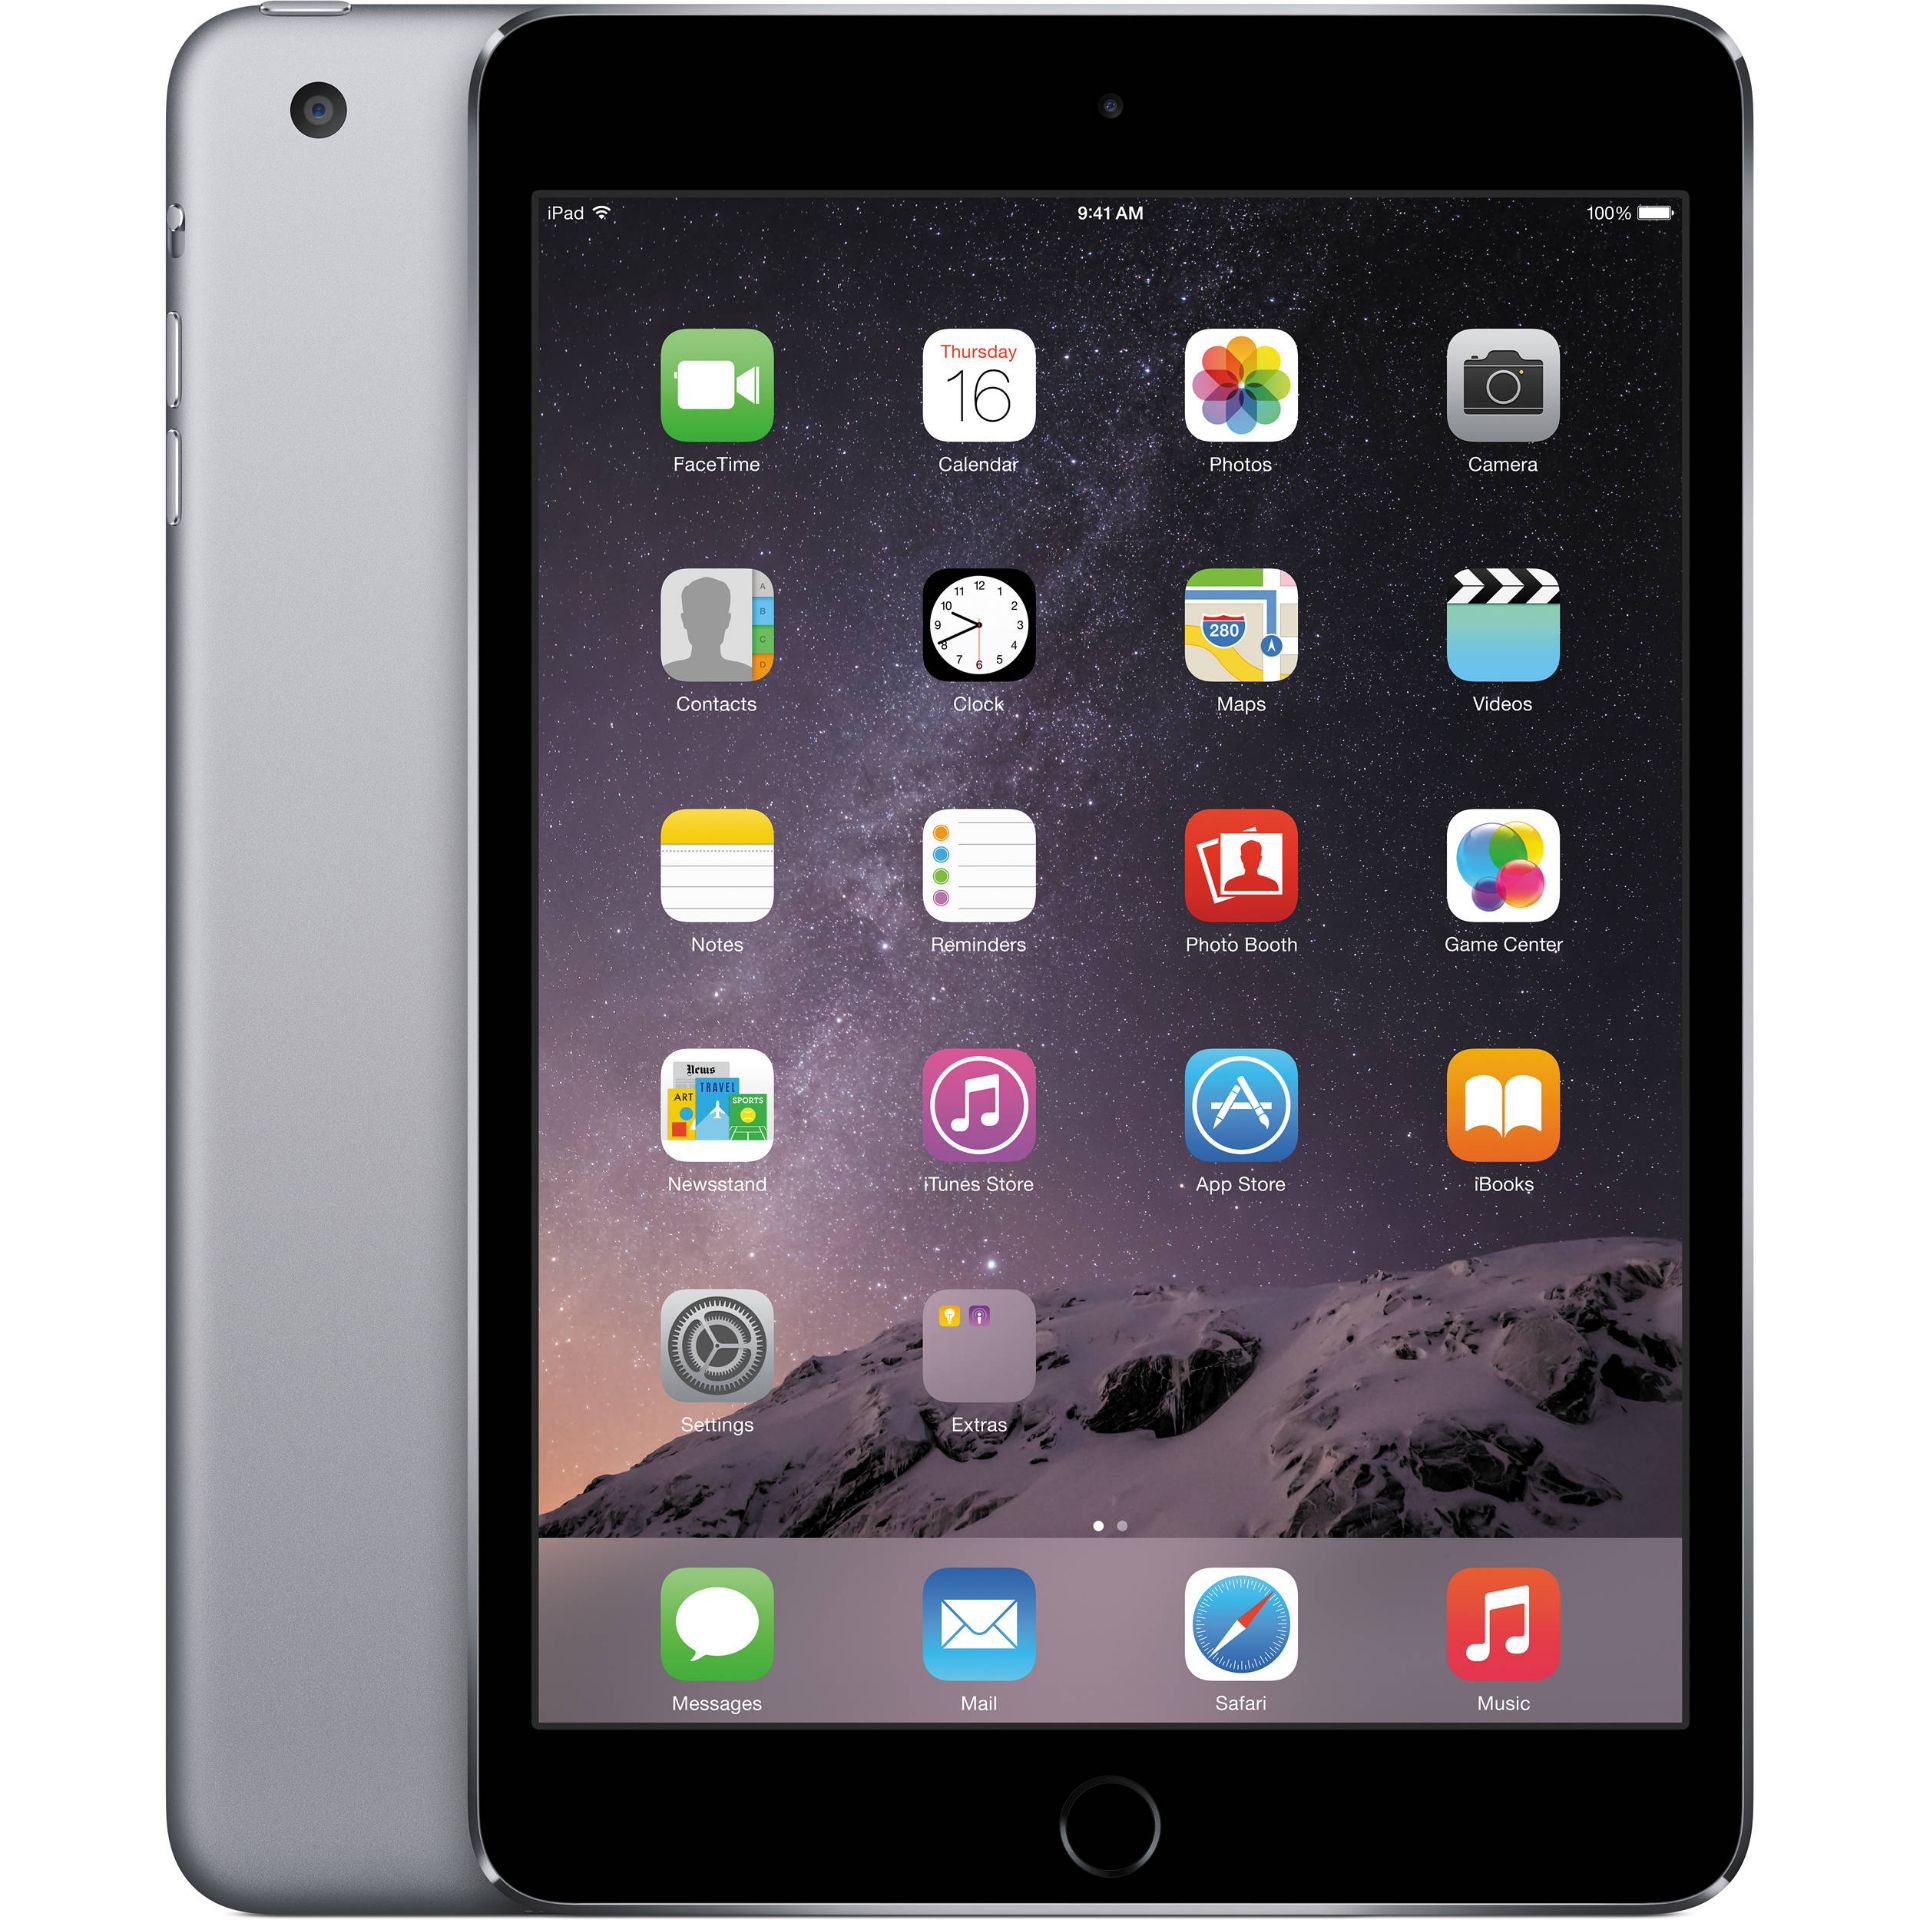 V Grade A Apple iPad mini - Wi-Fi - 16 GB - Space Grey - 7.9